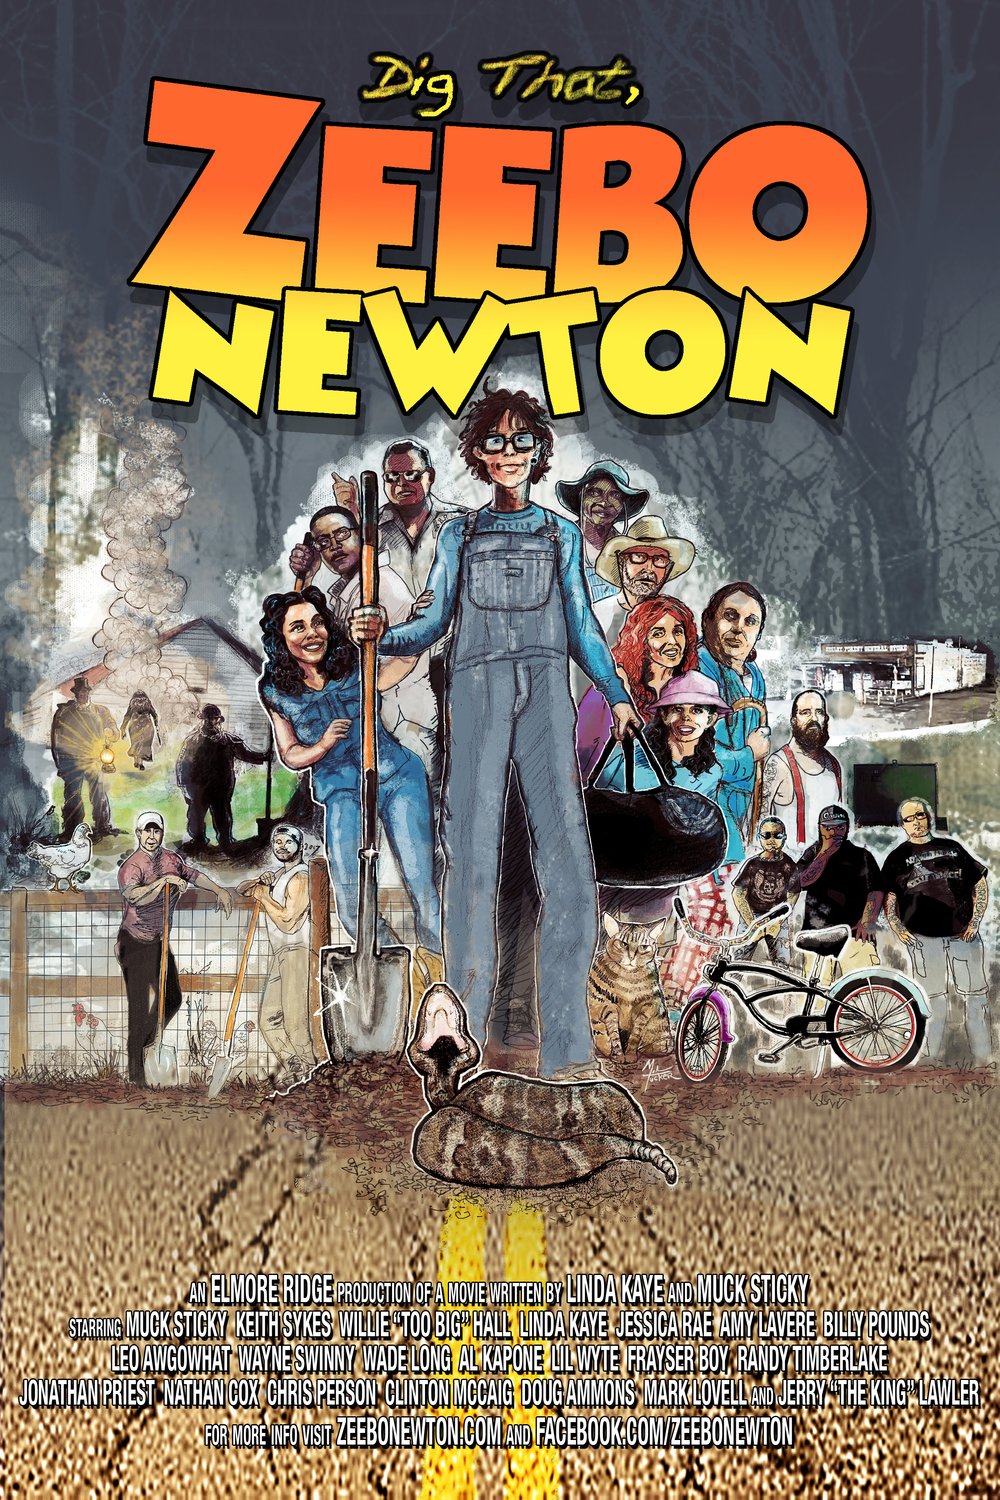 L'affiche du film Dig That, Zeebo Newton